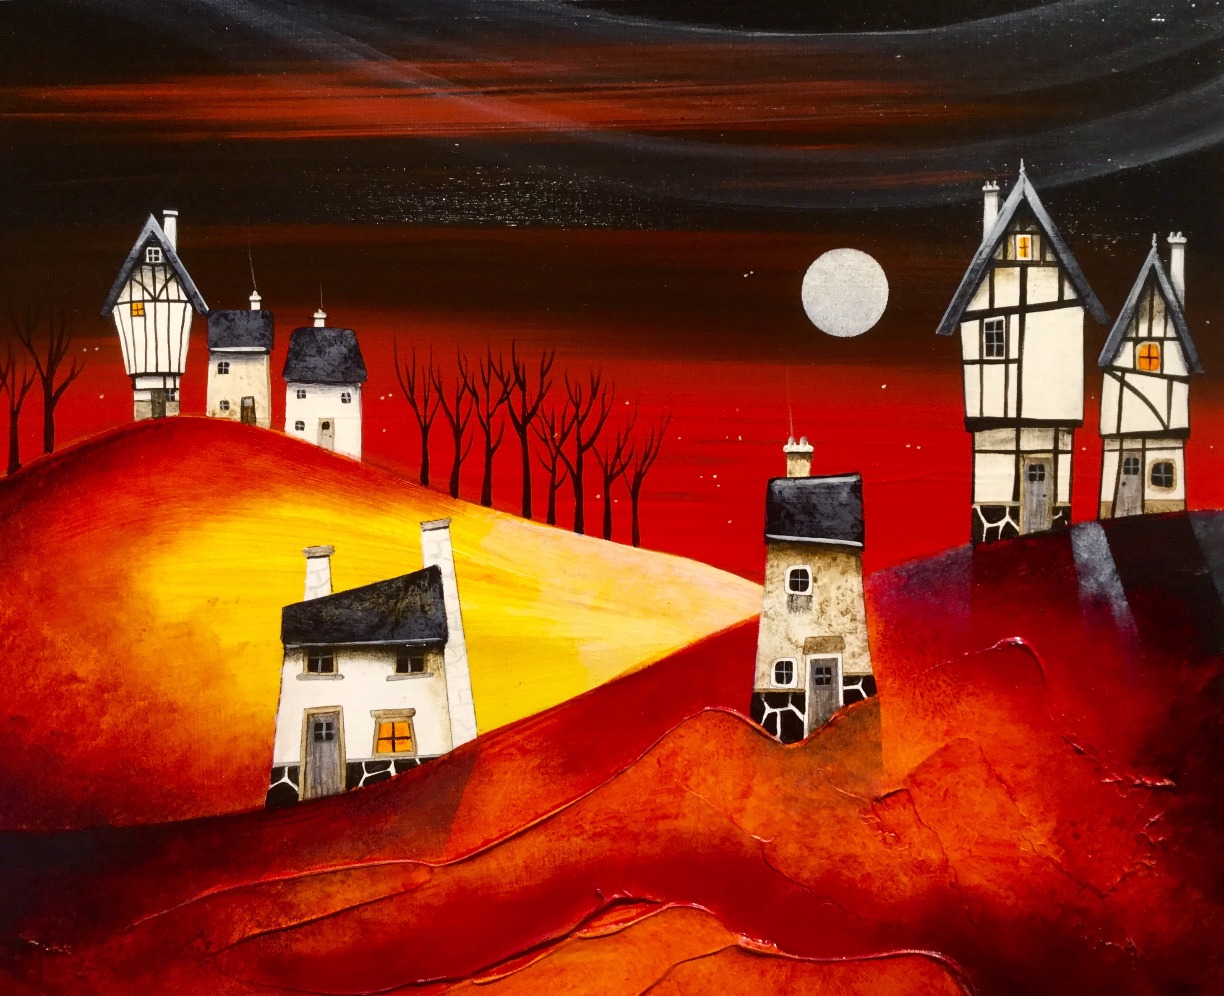 Red Sky at Night by Gary Walton